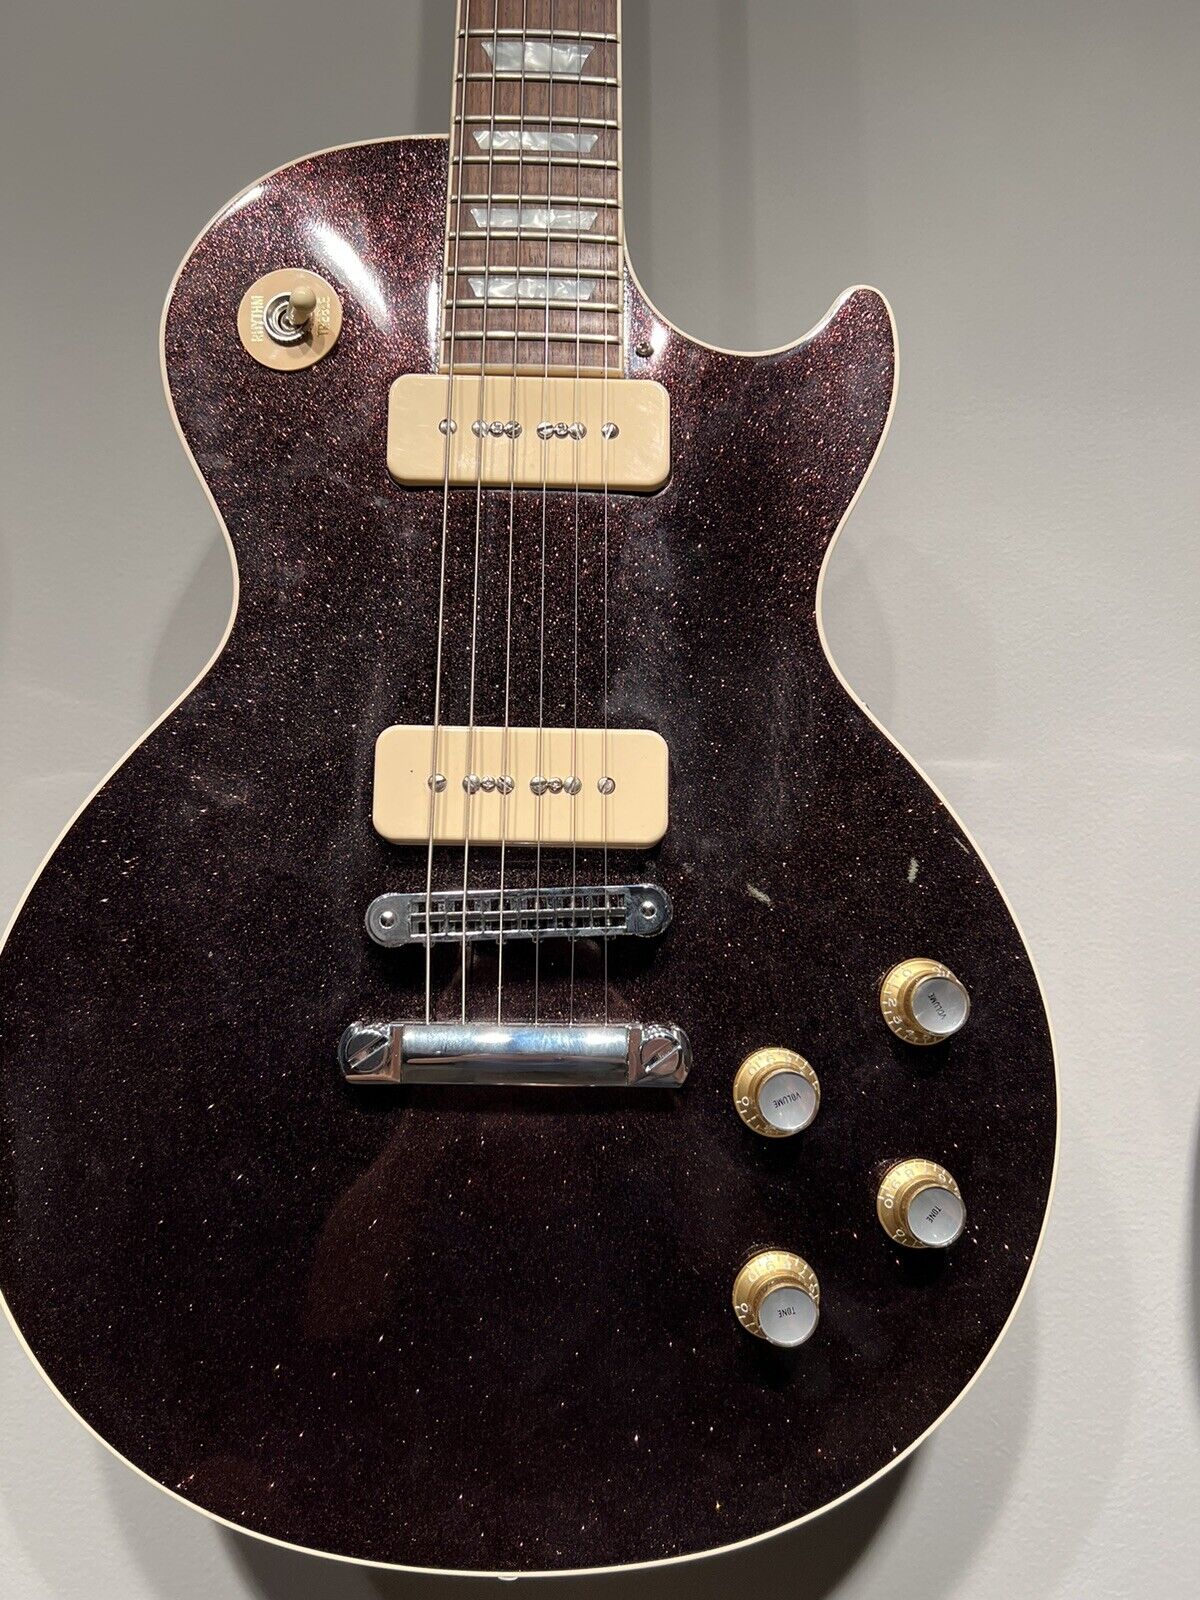 2018 Gibson Custom Shop Limited Edition Les Paul Elec Guitar P-90 Pickups + Case